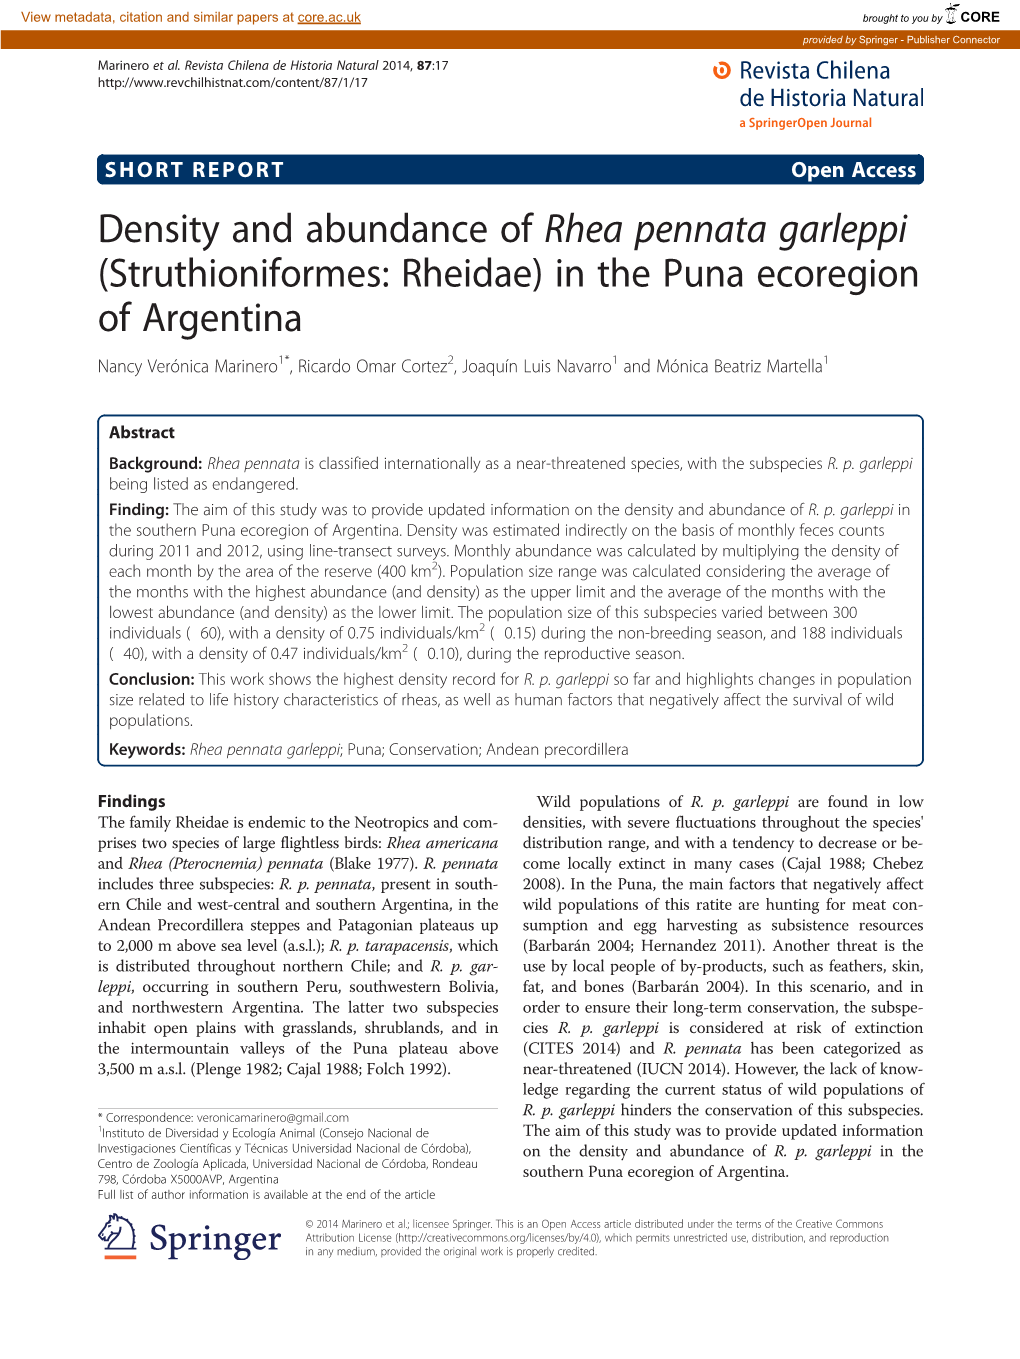 Density and Abundance of Rhea Pennata Garleppi (Struthioniformes